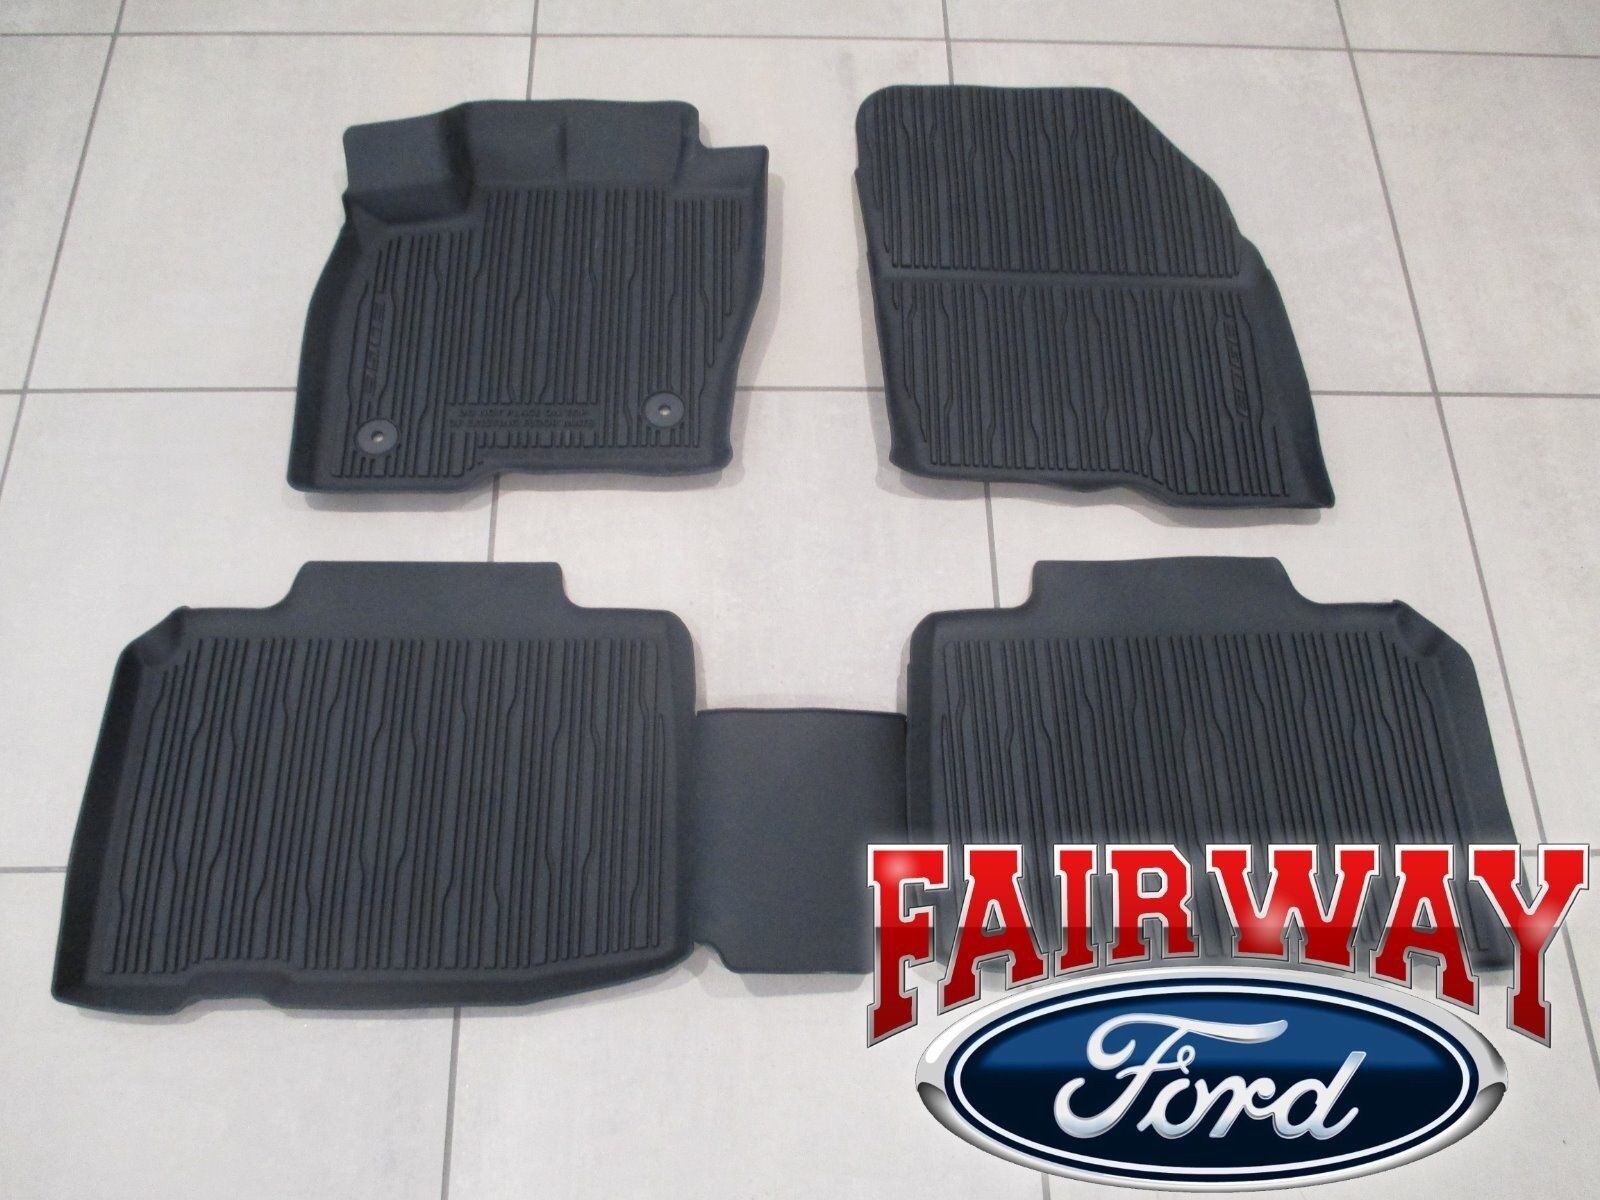 16 thru 24 Edge OEM Genuine Ford Tray Style Molded Black Floor Mat Set 4-pc NEW